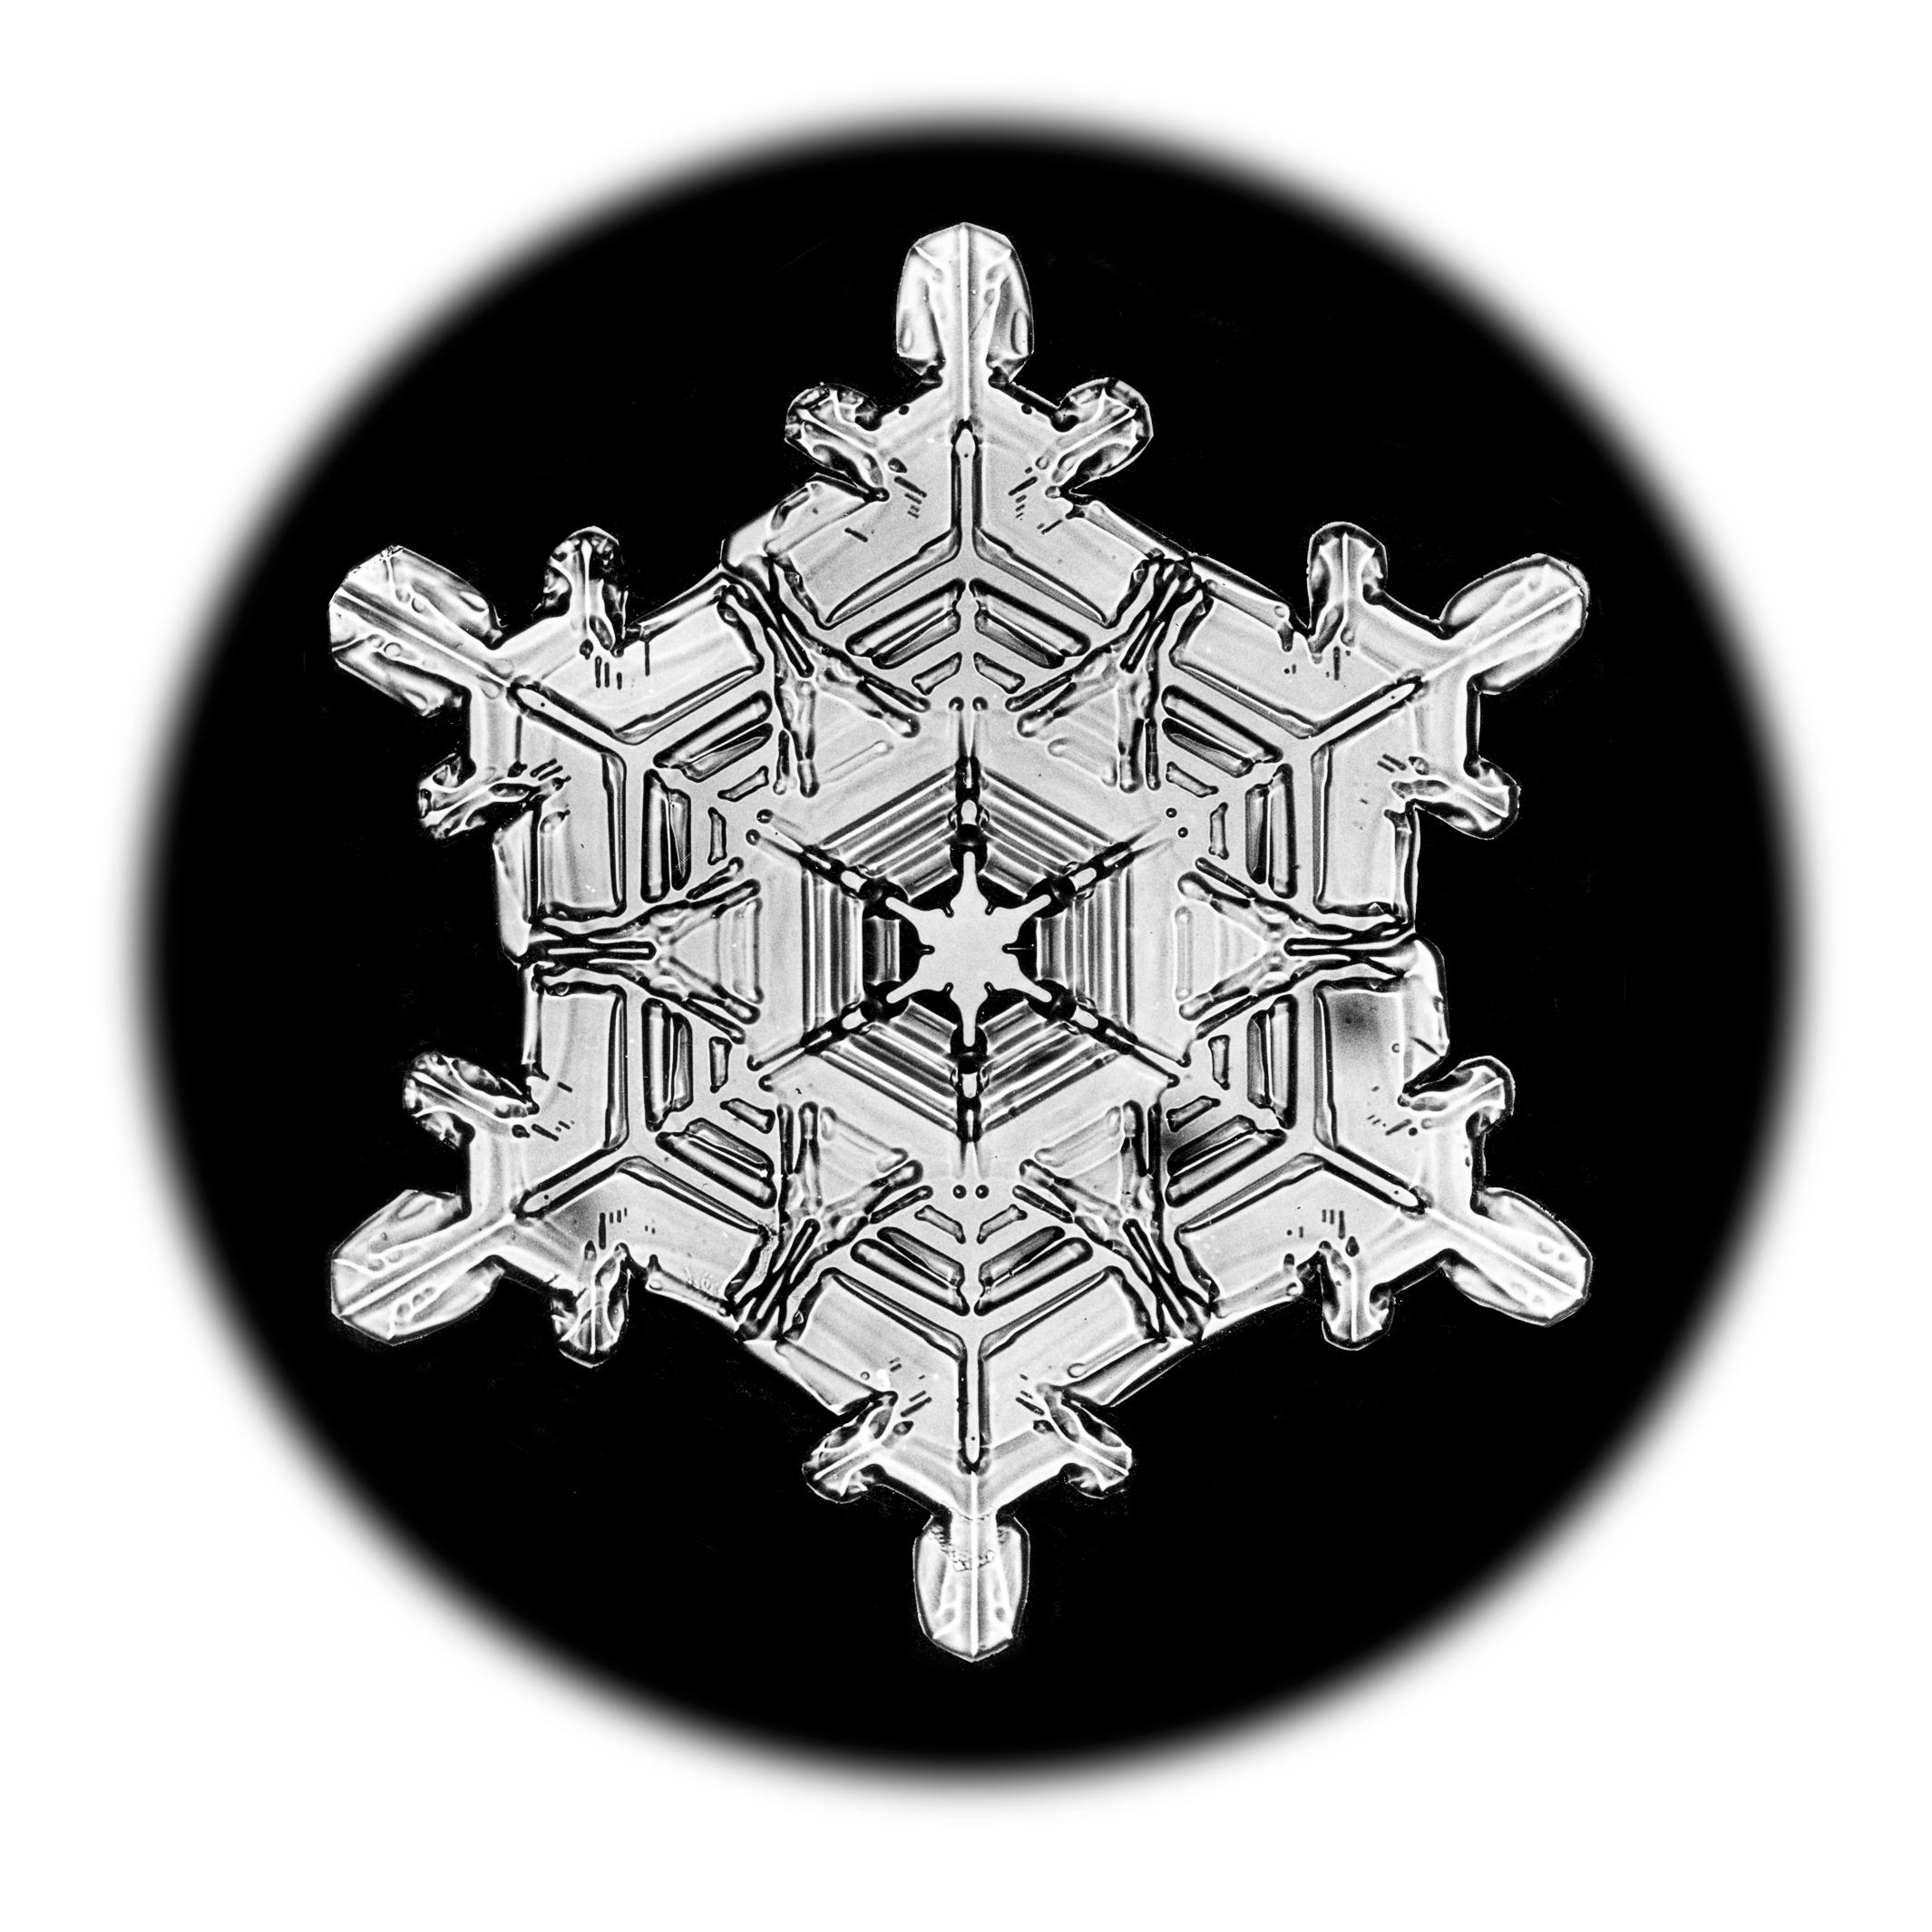 Wilson Bentley Landscape Print - Snowflake Microscopy 13